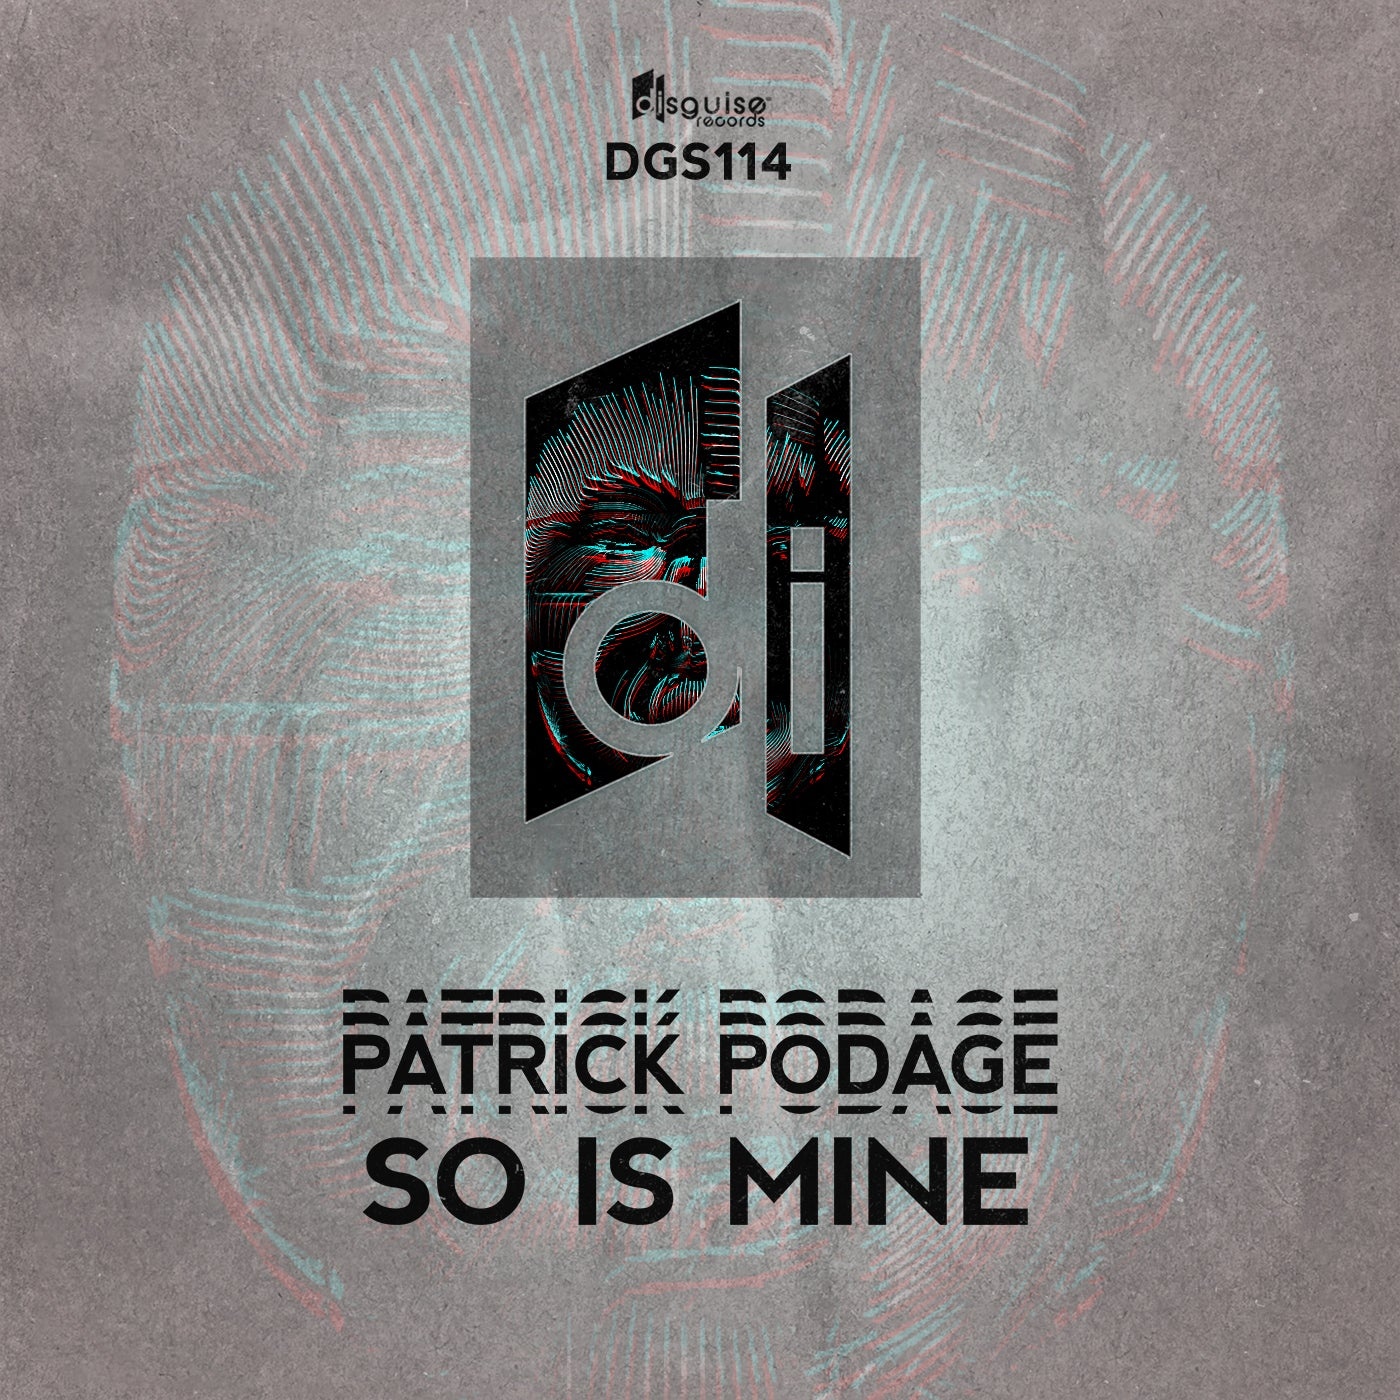 Patrick Podage - So Is Mine [DGS114]